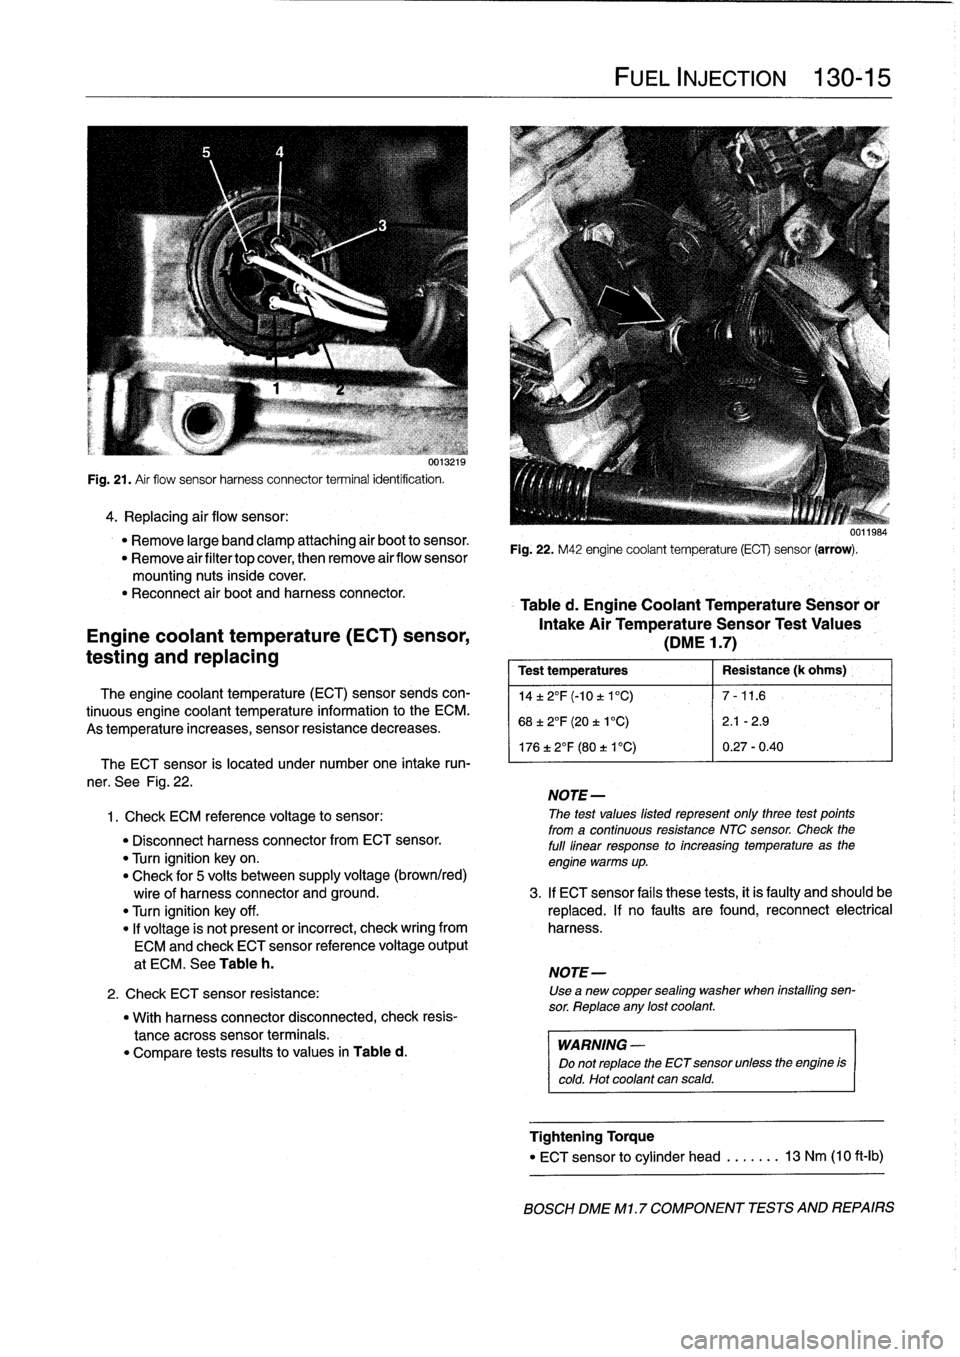 BMW 325i 1994 E36 Repair Manual u0
I
.[
Ia

Fig
.
21
.
Air
flow
sensor
harness
connector
terminal
identification
.

4
.
Replacing
air
flow
sensor
:

"
Remove
large
band
clamp
attaching
air
boot
to
sensor
.

"
Remove
airfiltertop
cov